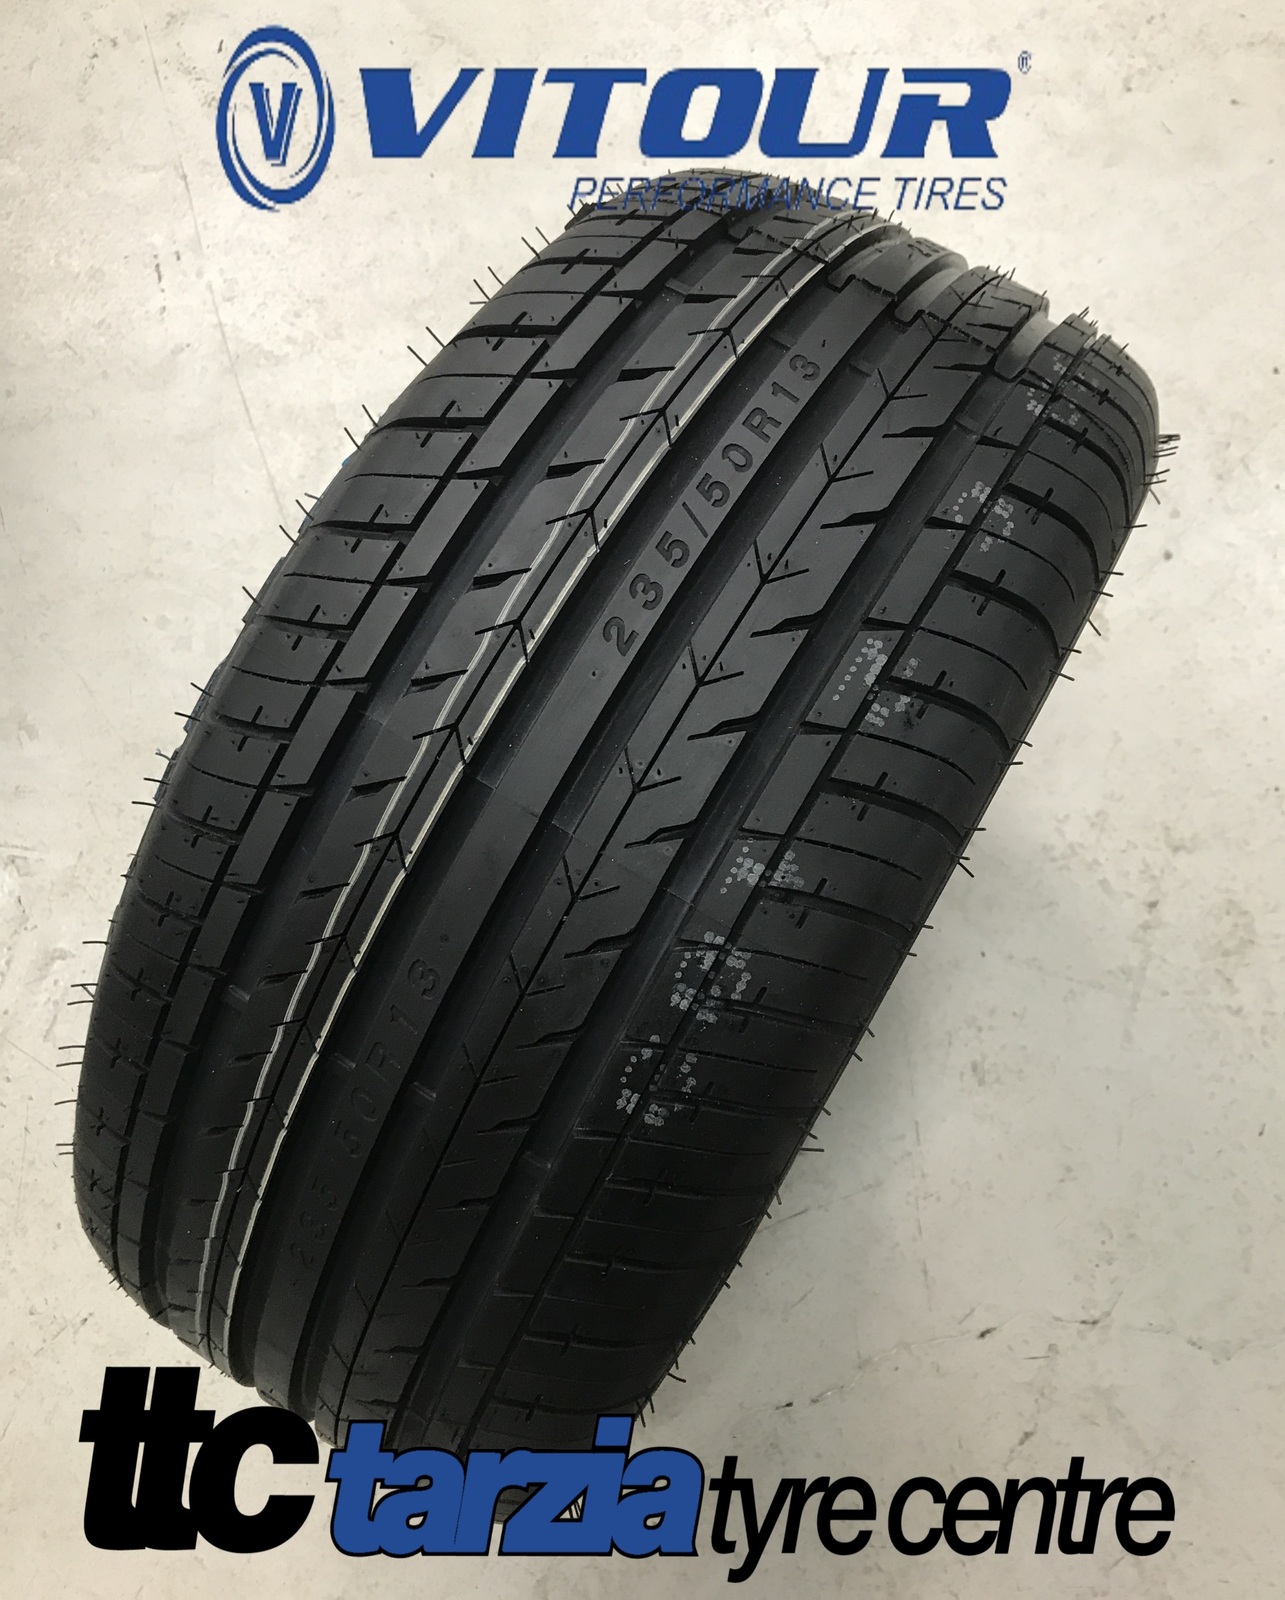 Vitour Formula 235 50r13 h Rwl New Pro Street Passenger Tyre 235 50 13